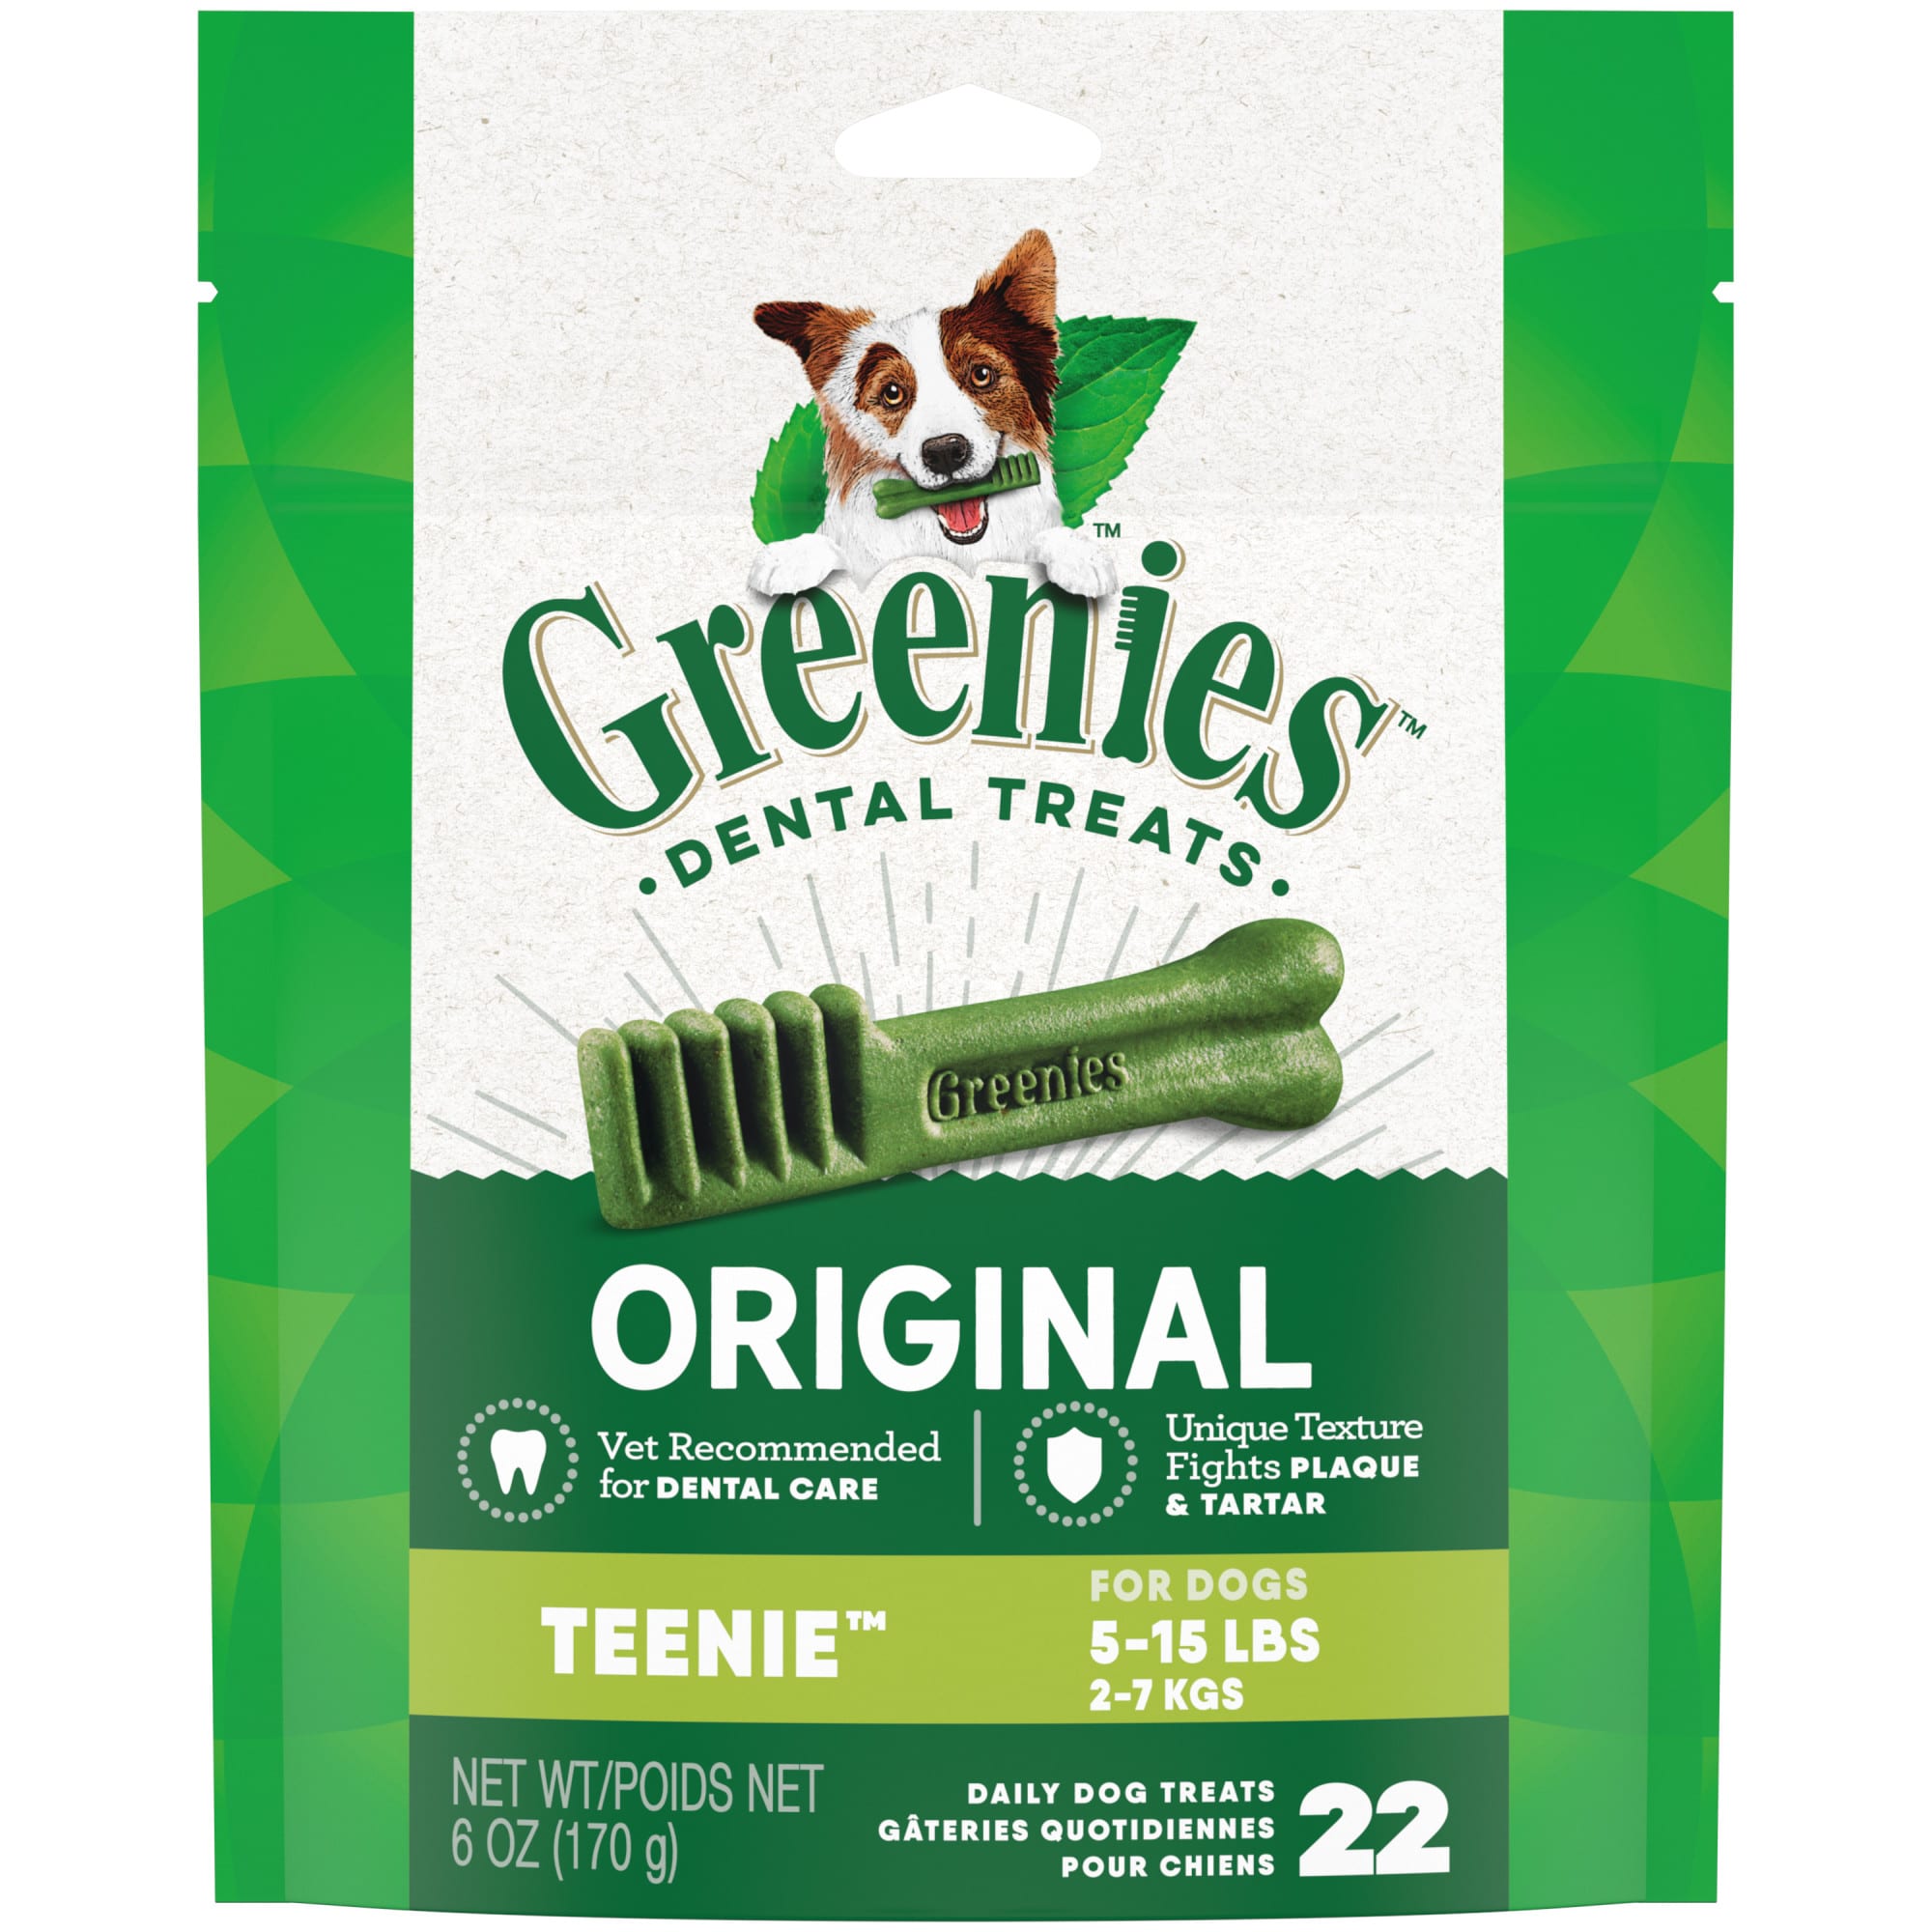 greenies dog treats